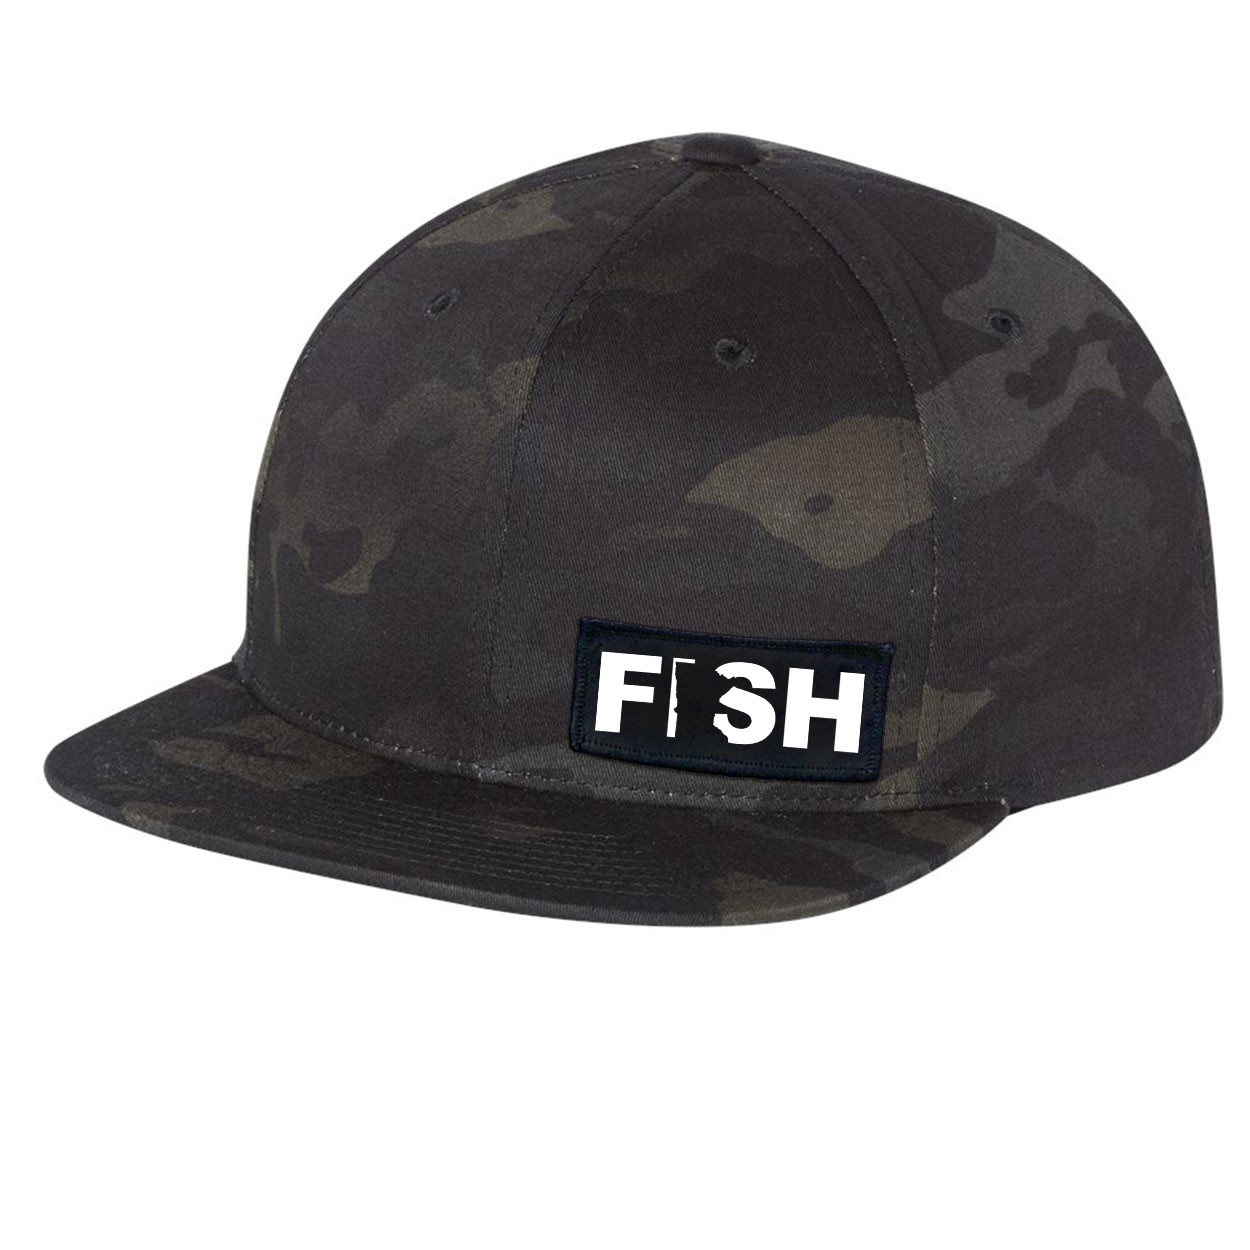 Fish Minnesota Night Out Woven Patch Flat Brim Snapback Hat Black Camo